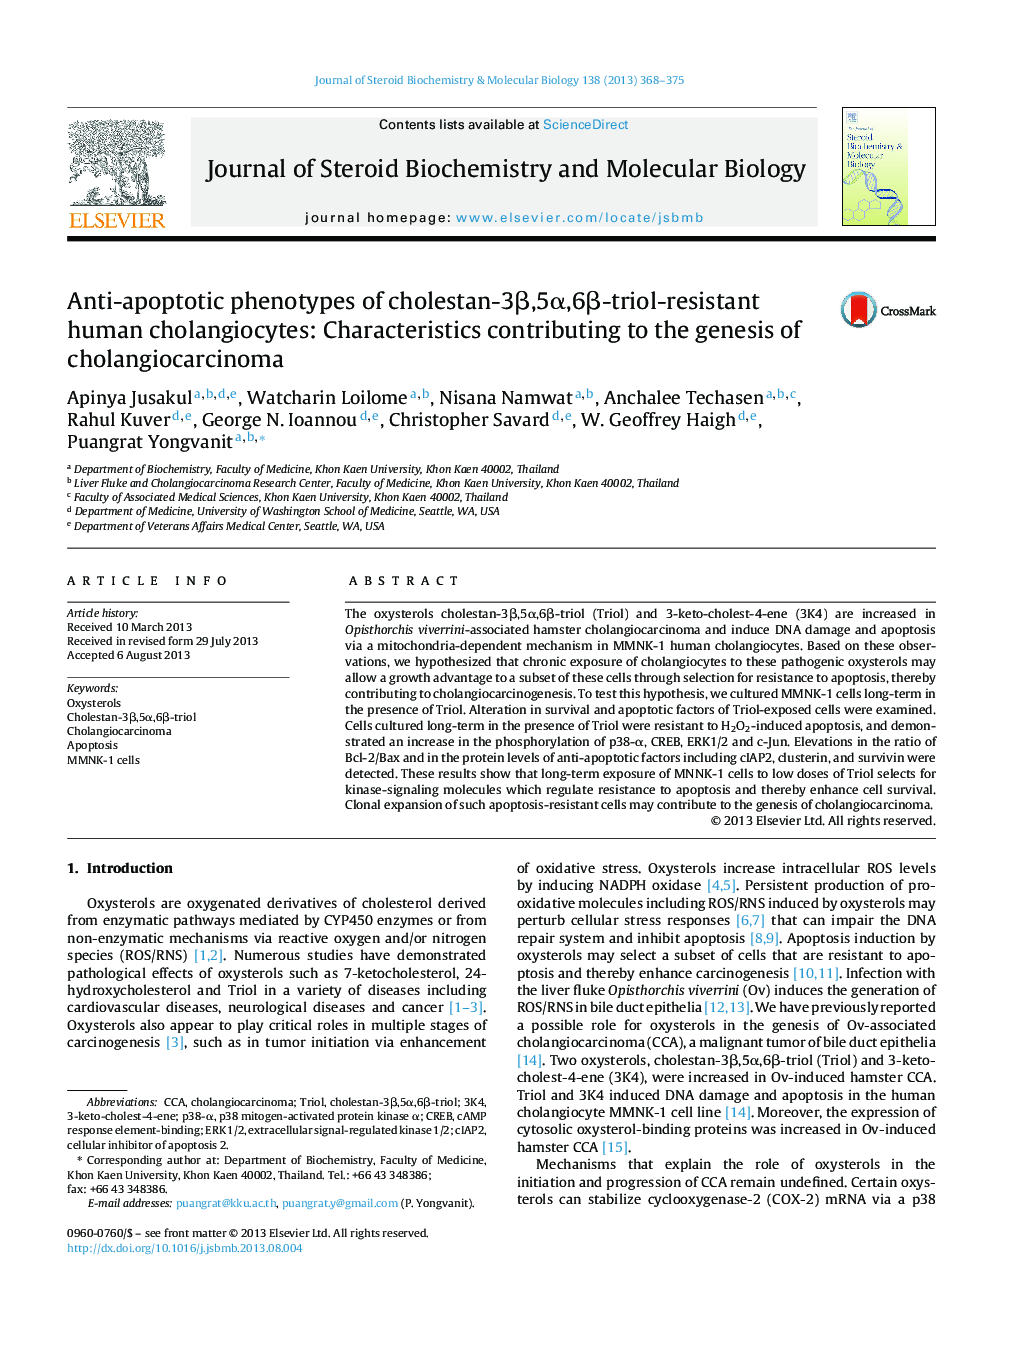 Anti-apoptotic phenotypes of cholestan-3Î²,5Î±,6Î²-triol-resistant human cholangiocytes: Characteristics contributing to the genesis of cholangiocarcinoma